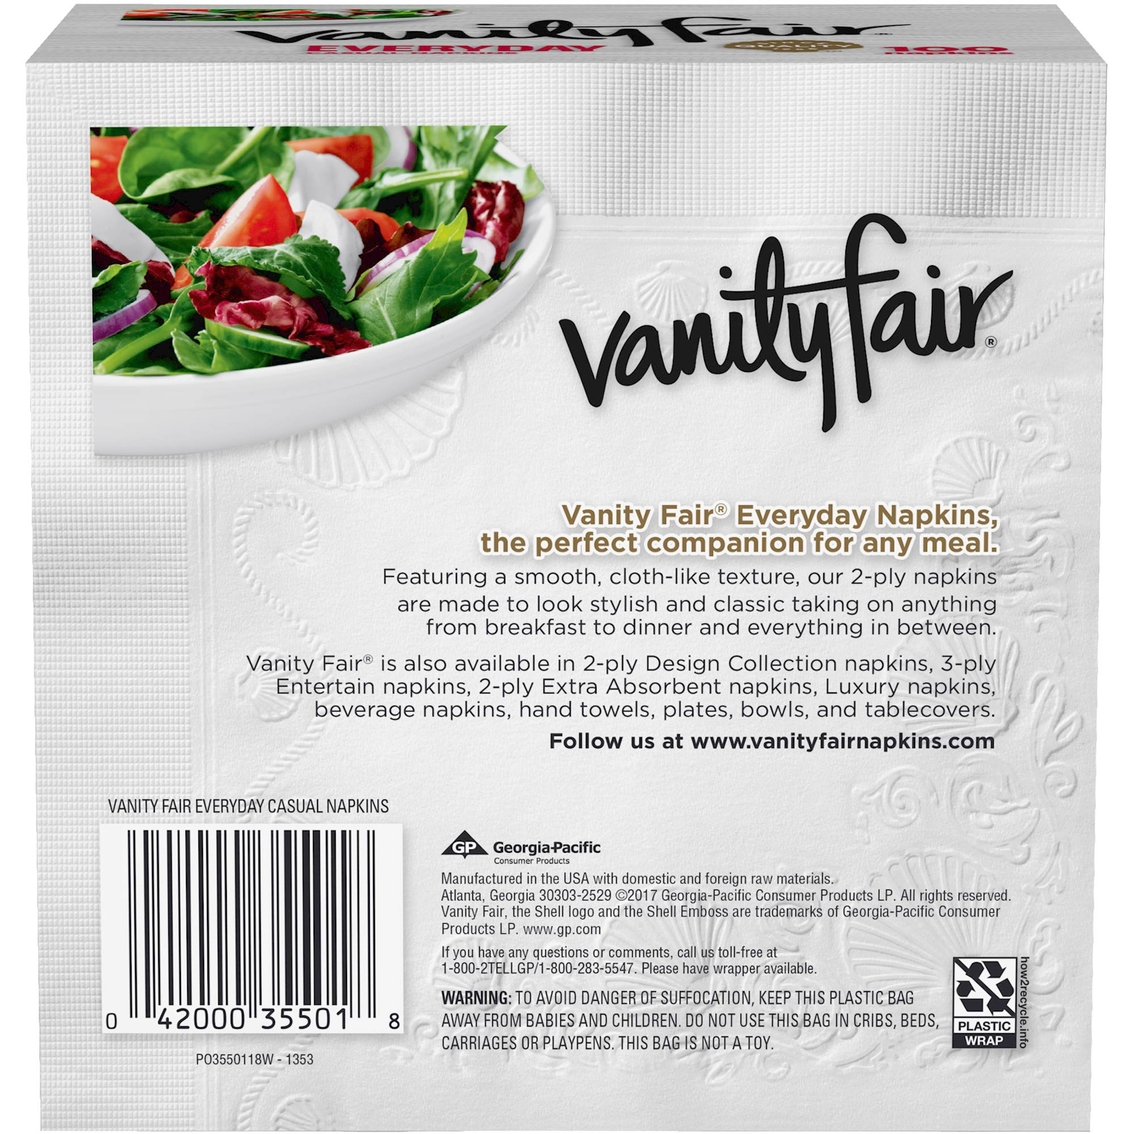 Vanity Fair Everyday Napkin 100 Ct. - Image 2 of 2